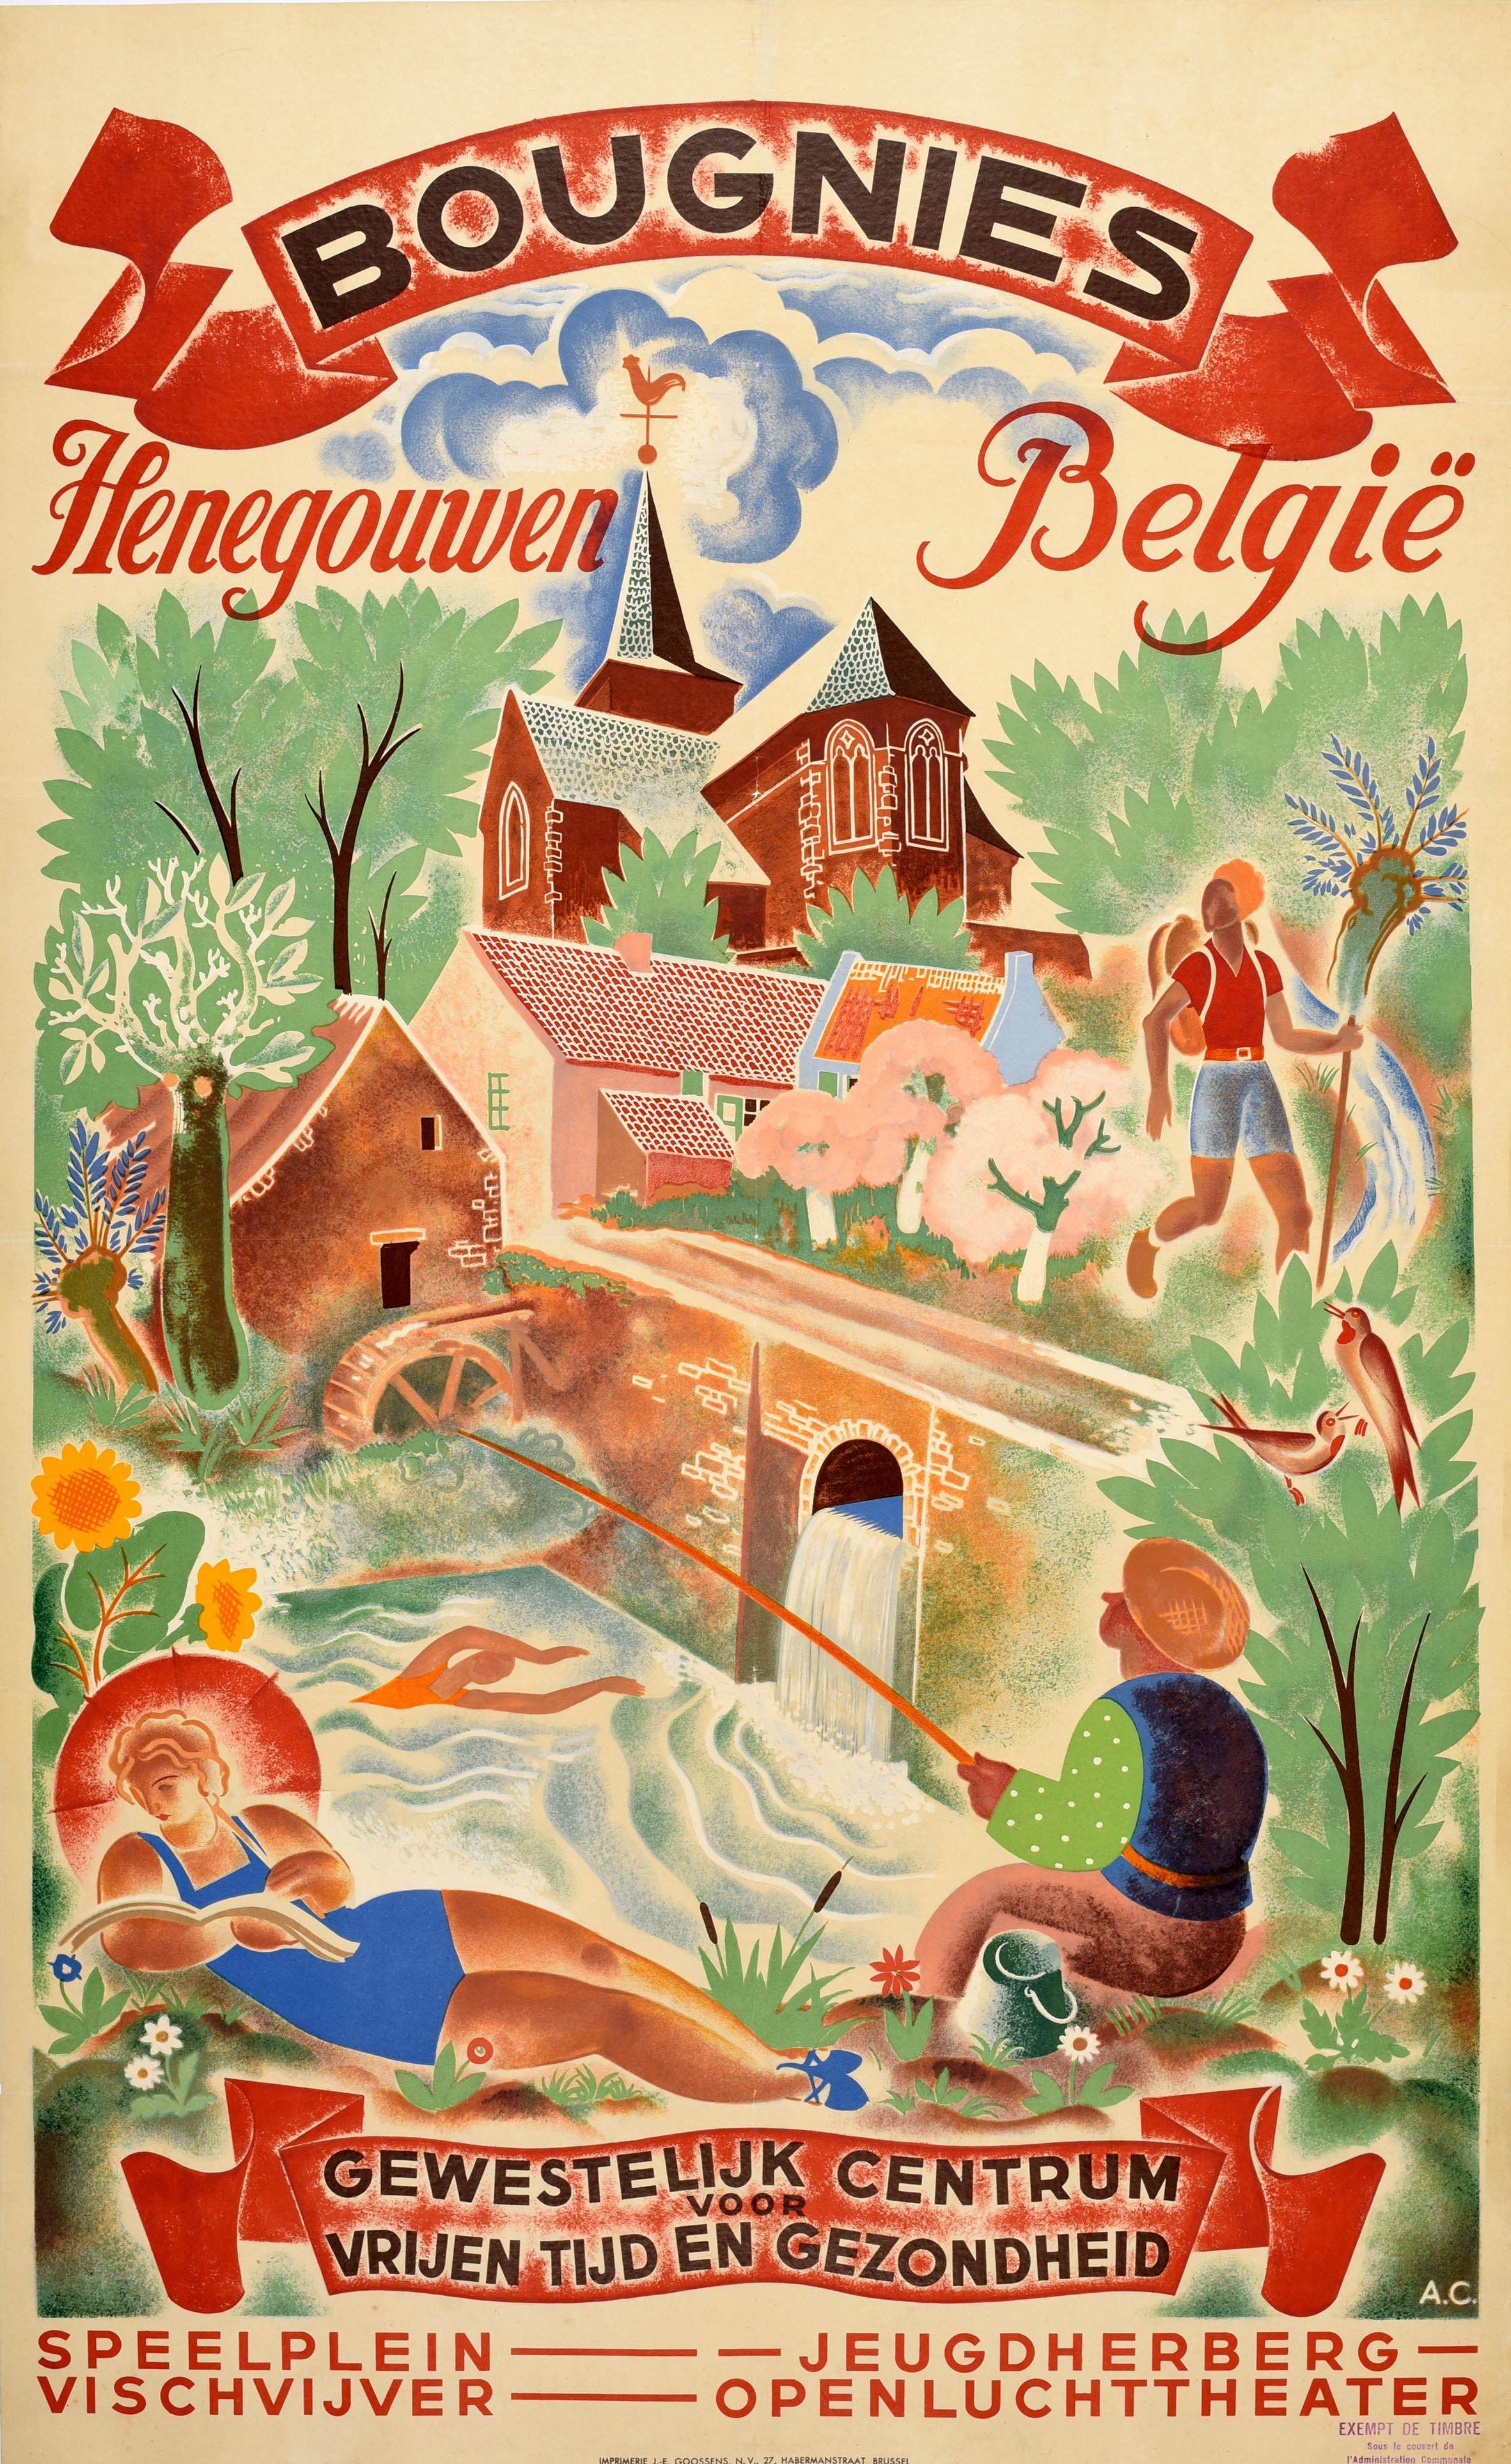 Unknown Print - Original Vintage Travel Poster Bougnies Henegouwen Belgie Belgium Sport Leisure